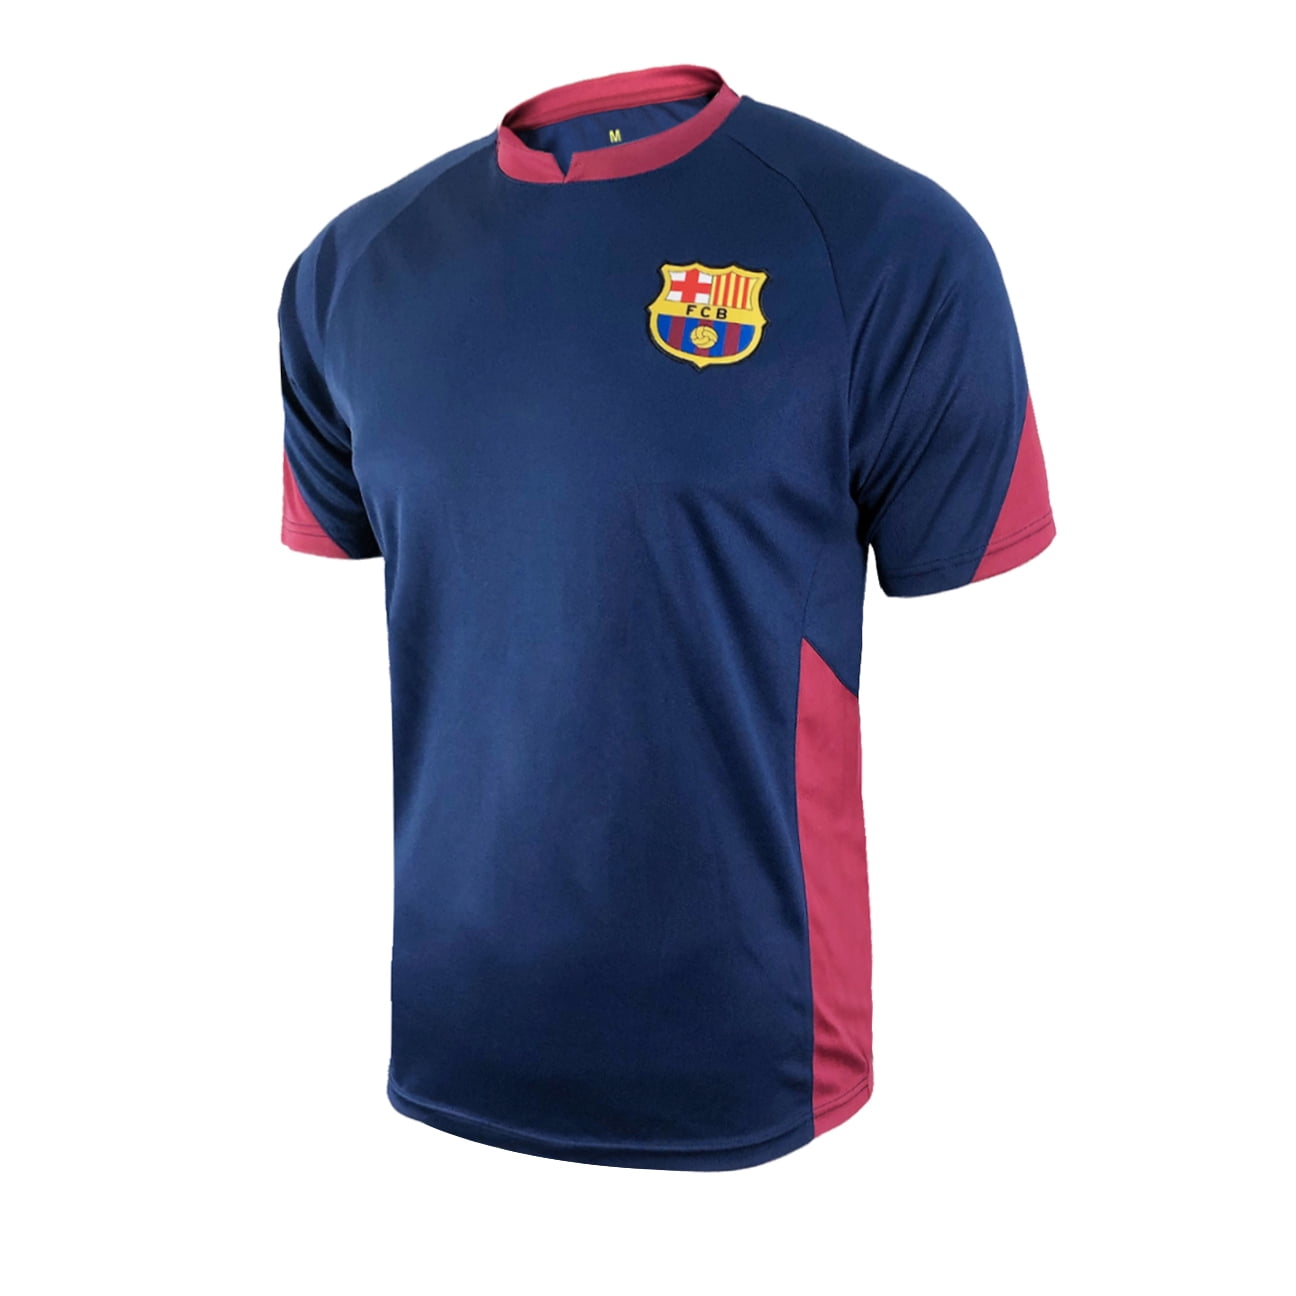 Licensed Product 100% Polyester Fútbol Club Barcelona Trainning Barça Fuchsia Child T-Shirt Child Size 